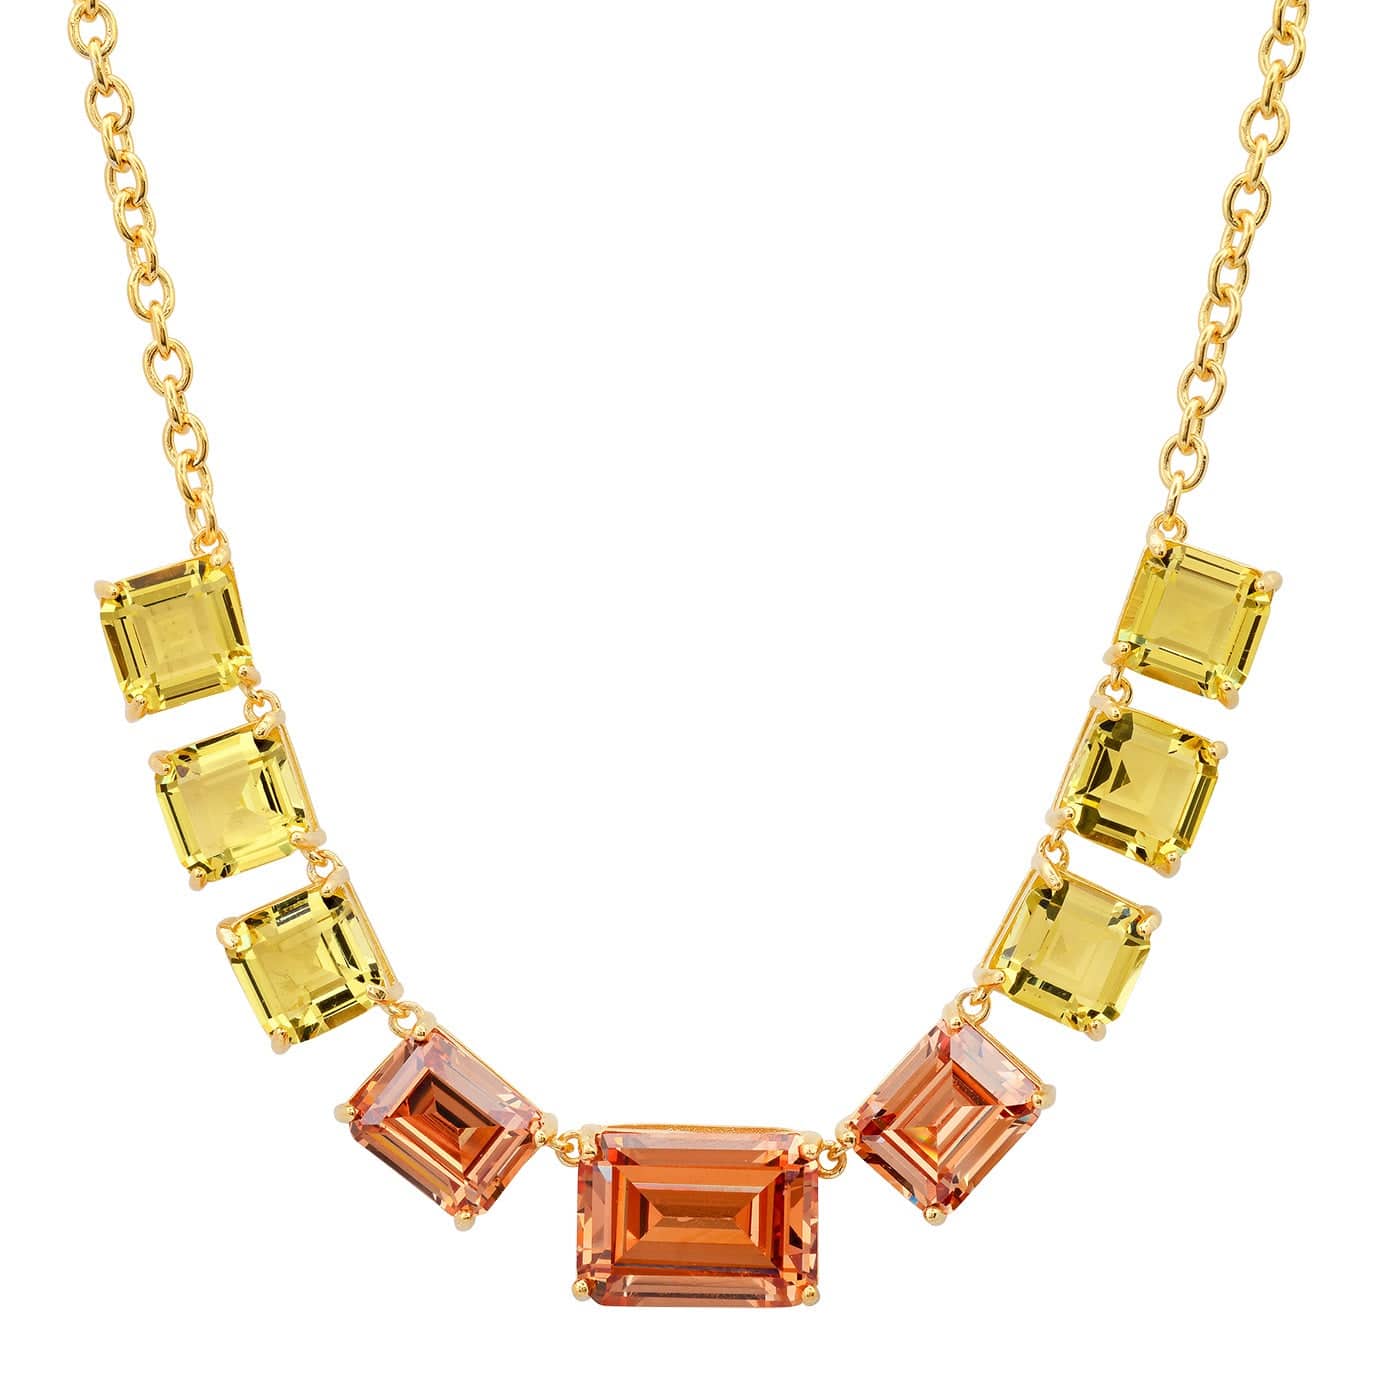 TAI JEWELRY Necklace GV/CHAM Chunky Emerald Cut Glass Stone Necklace